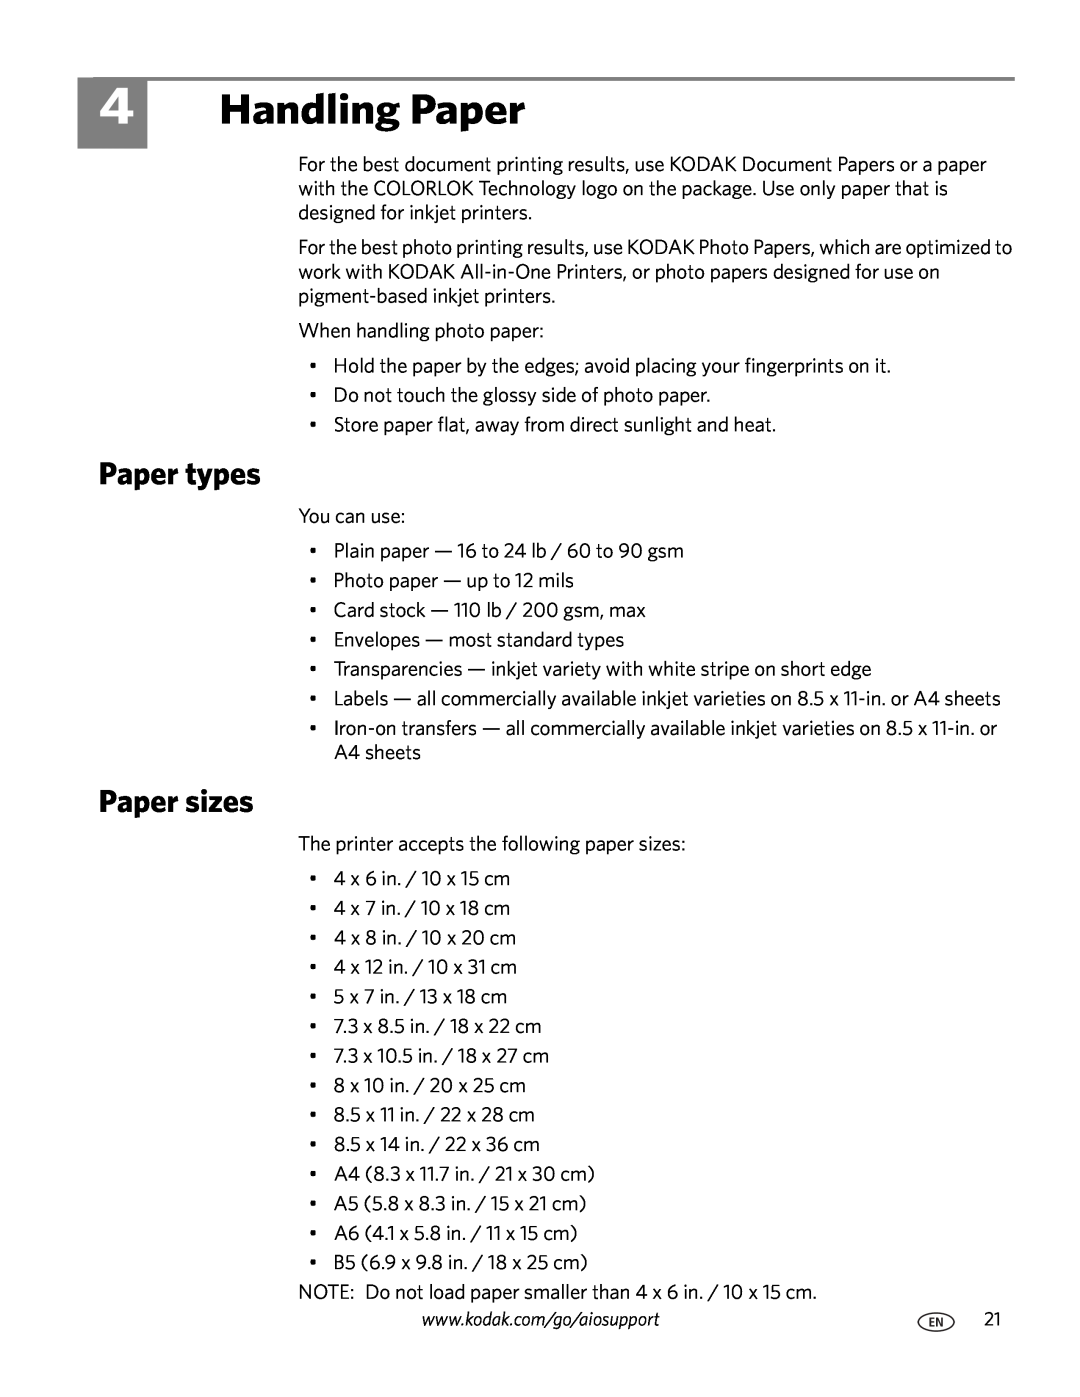 Kodak 3.1 manual Handling Paper, Paper types, Paper sizes 